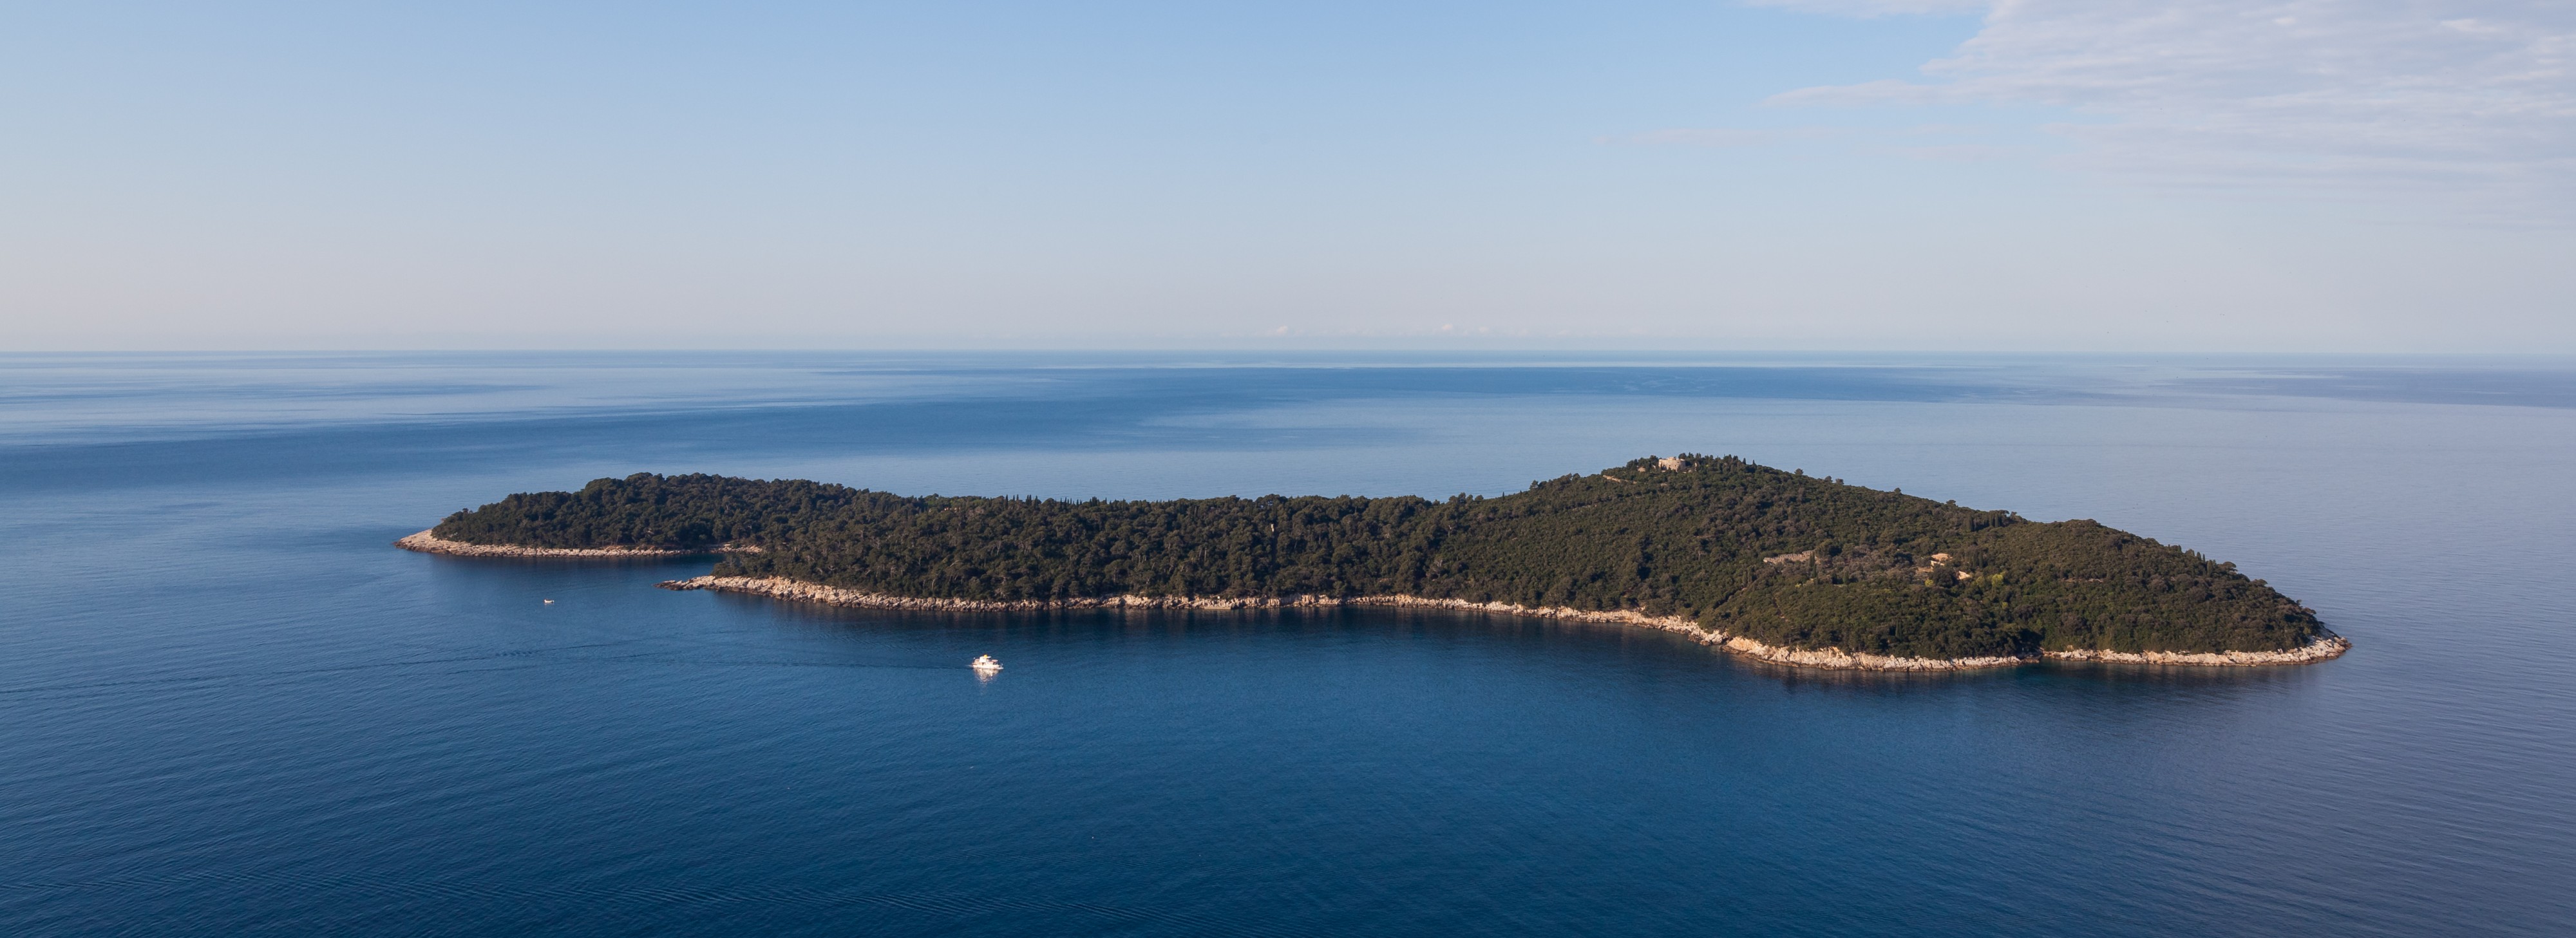 Isla de Lokrum, Croacia, 2014-04-14, DD 01